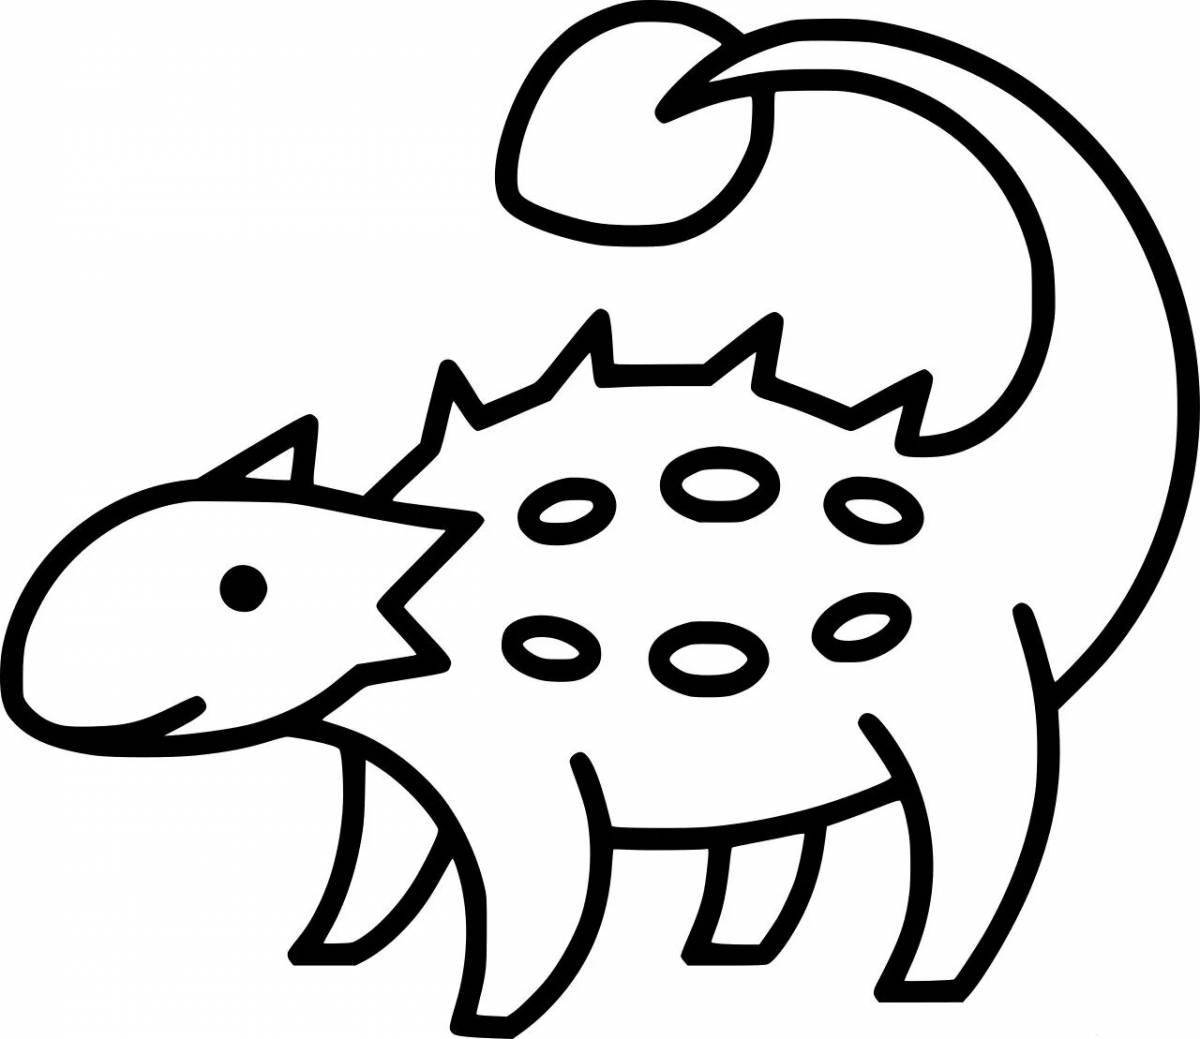 Joyful ankylosaurus coloring book for kids